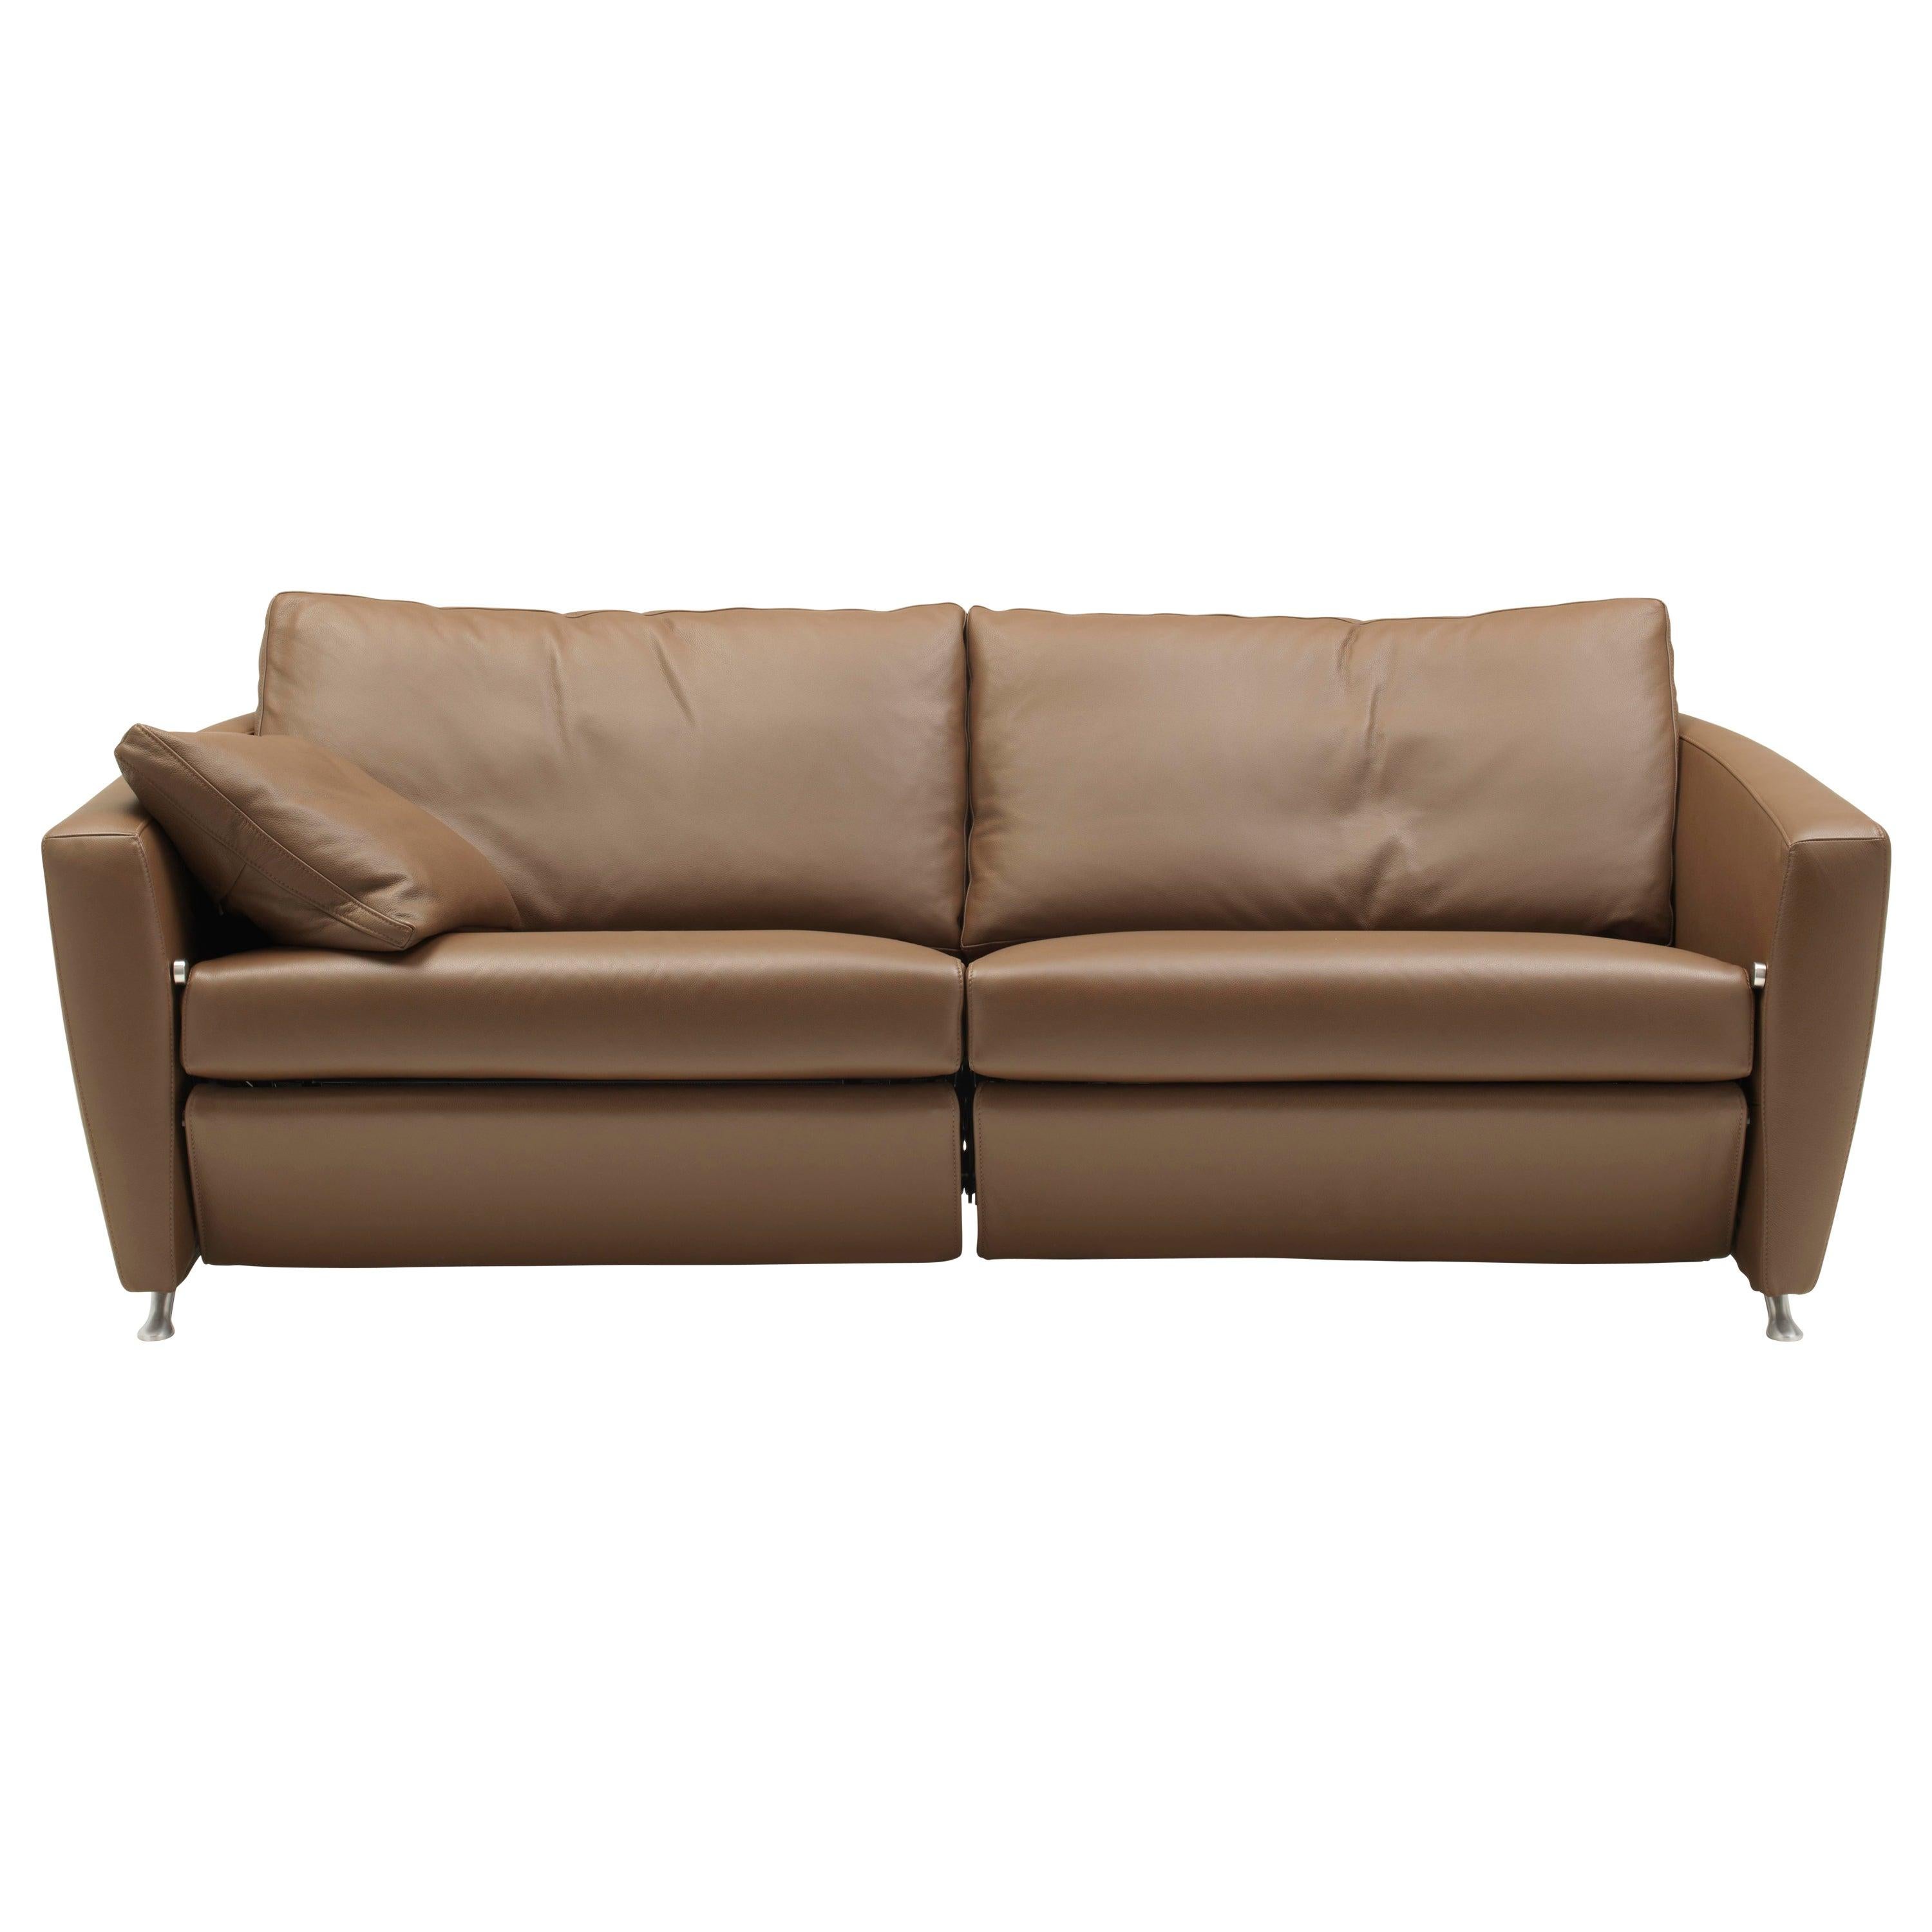 Canapé inclinable en cuir Sesam réglable de FSM